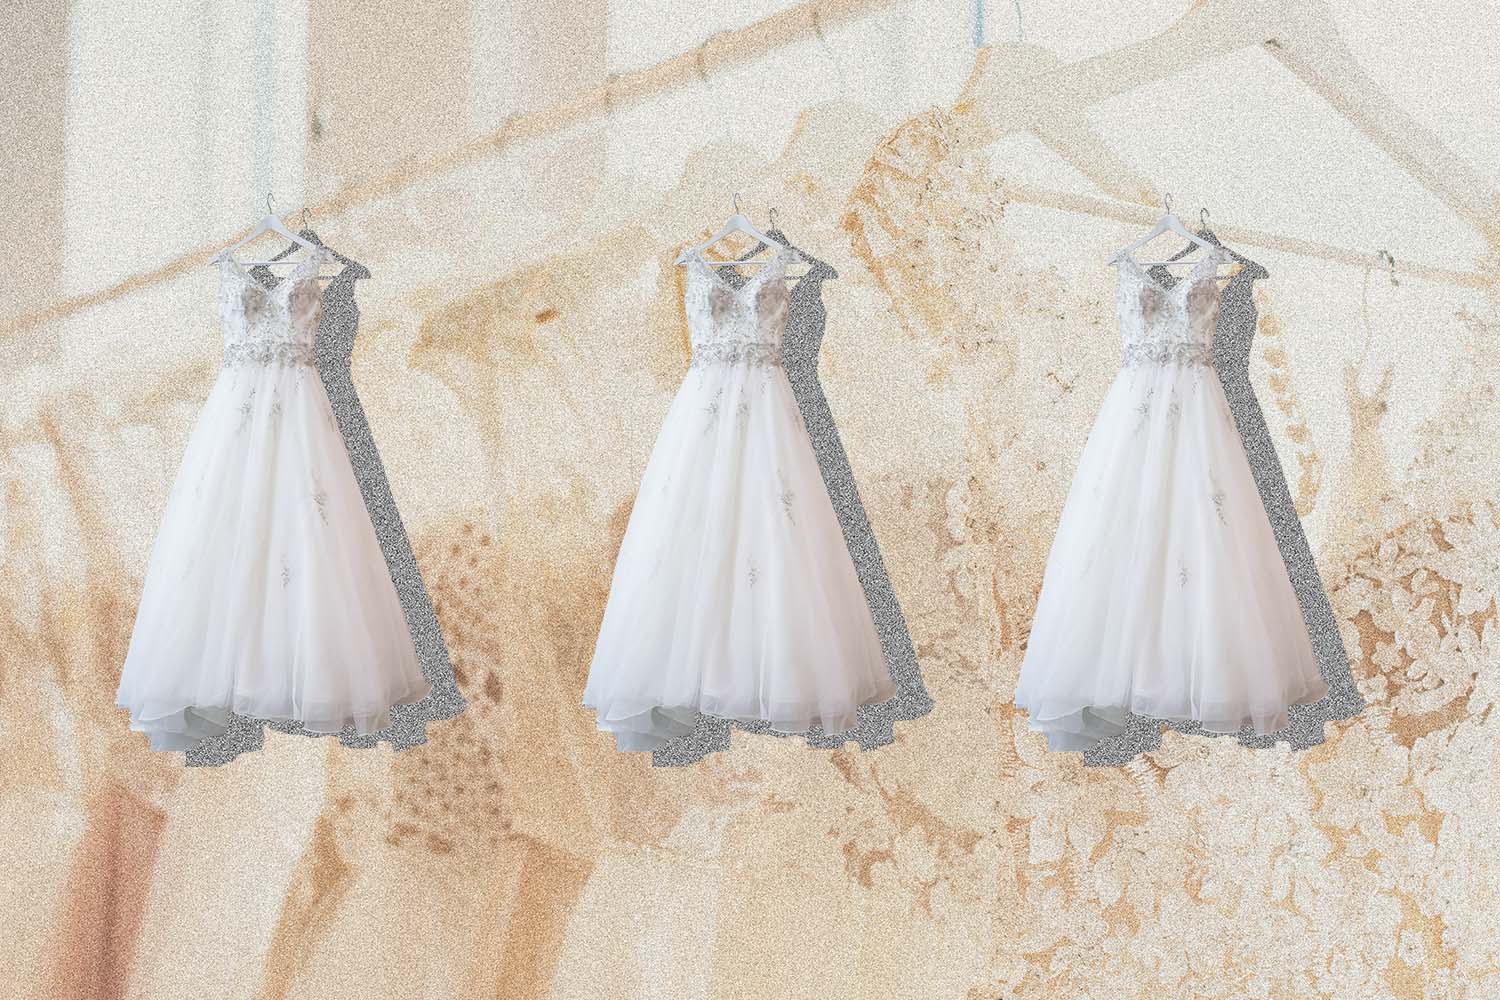 Three wedding dresses hanging